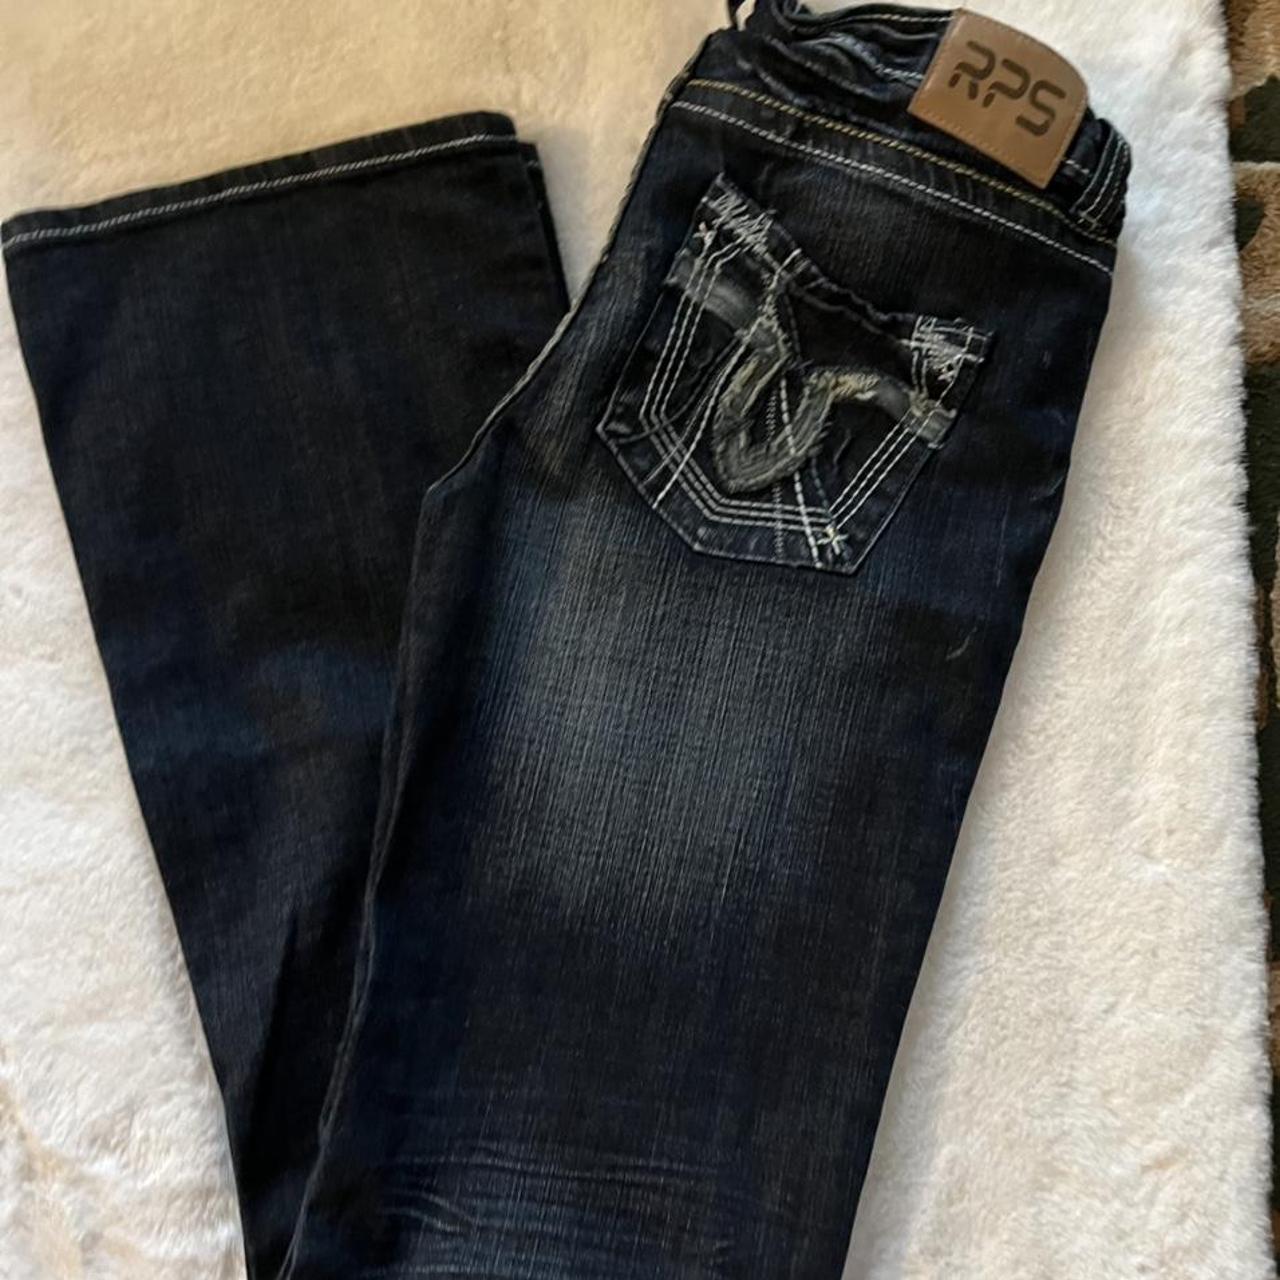 RPS bootcut y2k jeans size 13 but fits an... - Depop